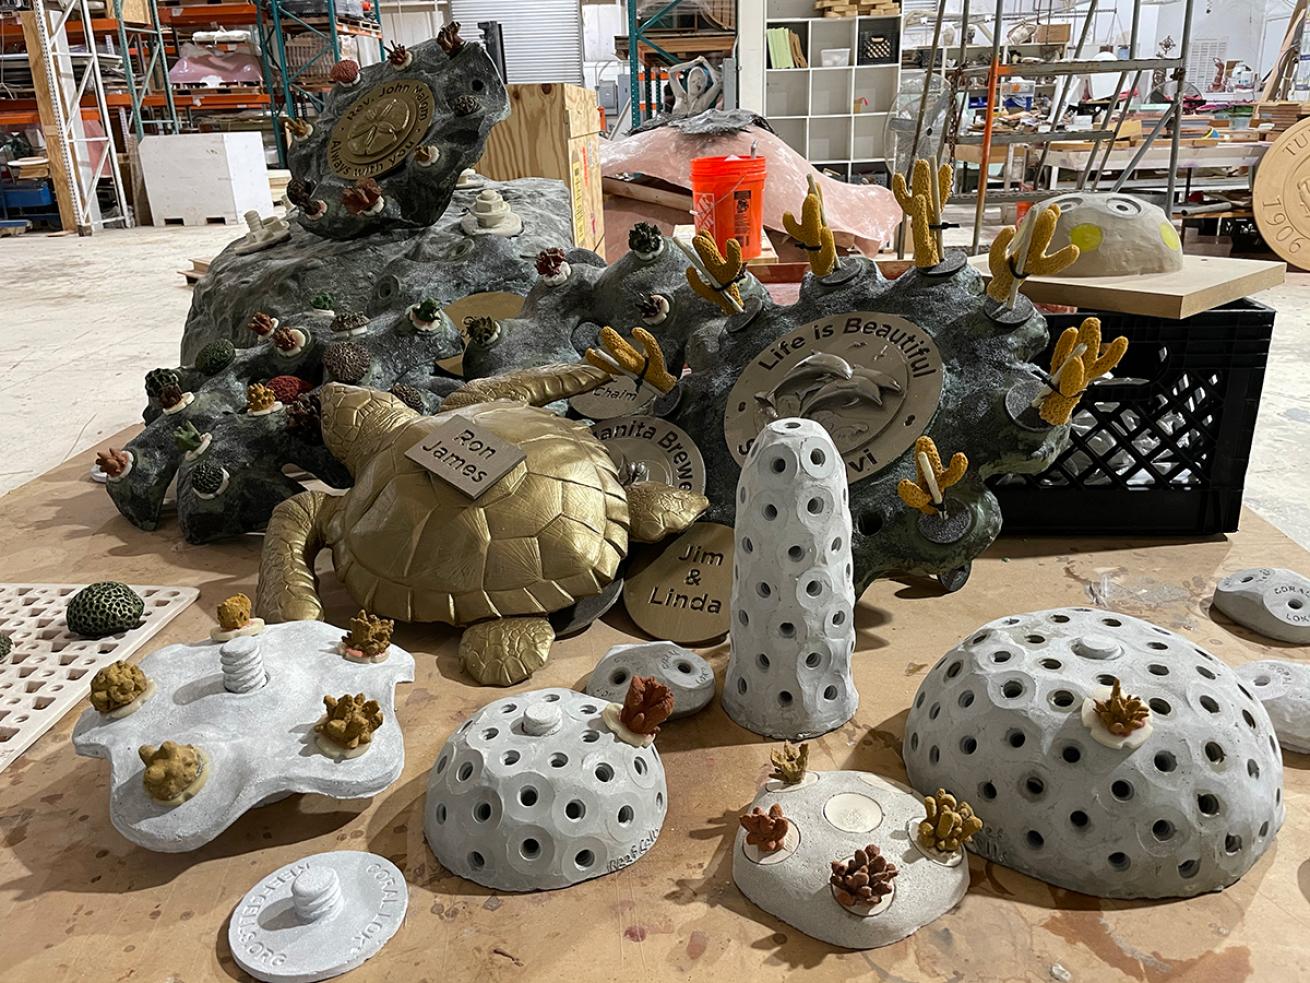 Pile of reef restoration sculptures